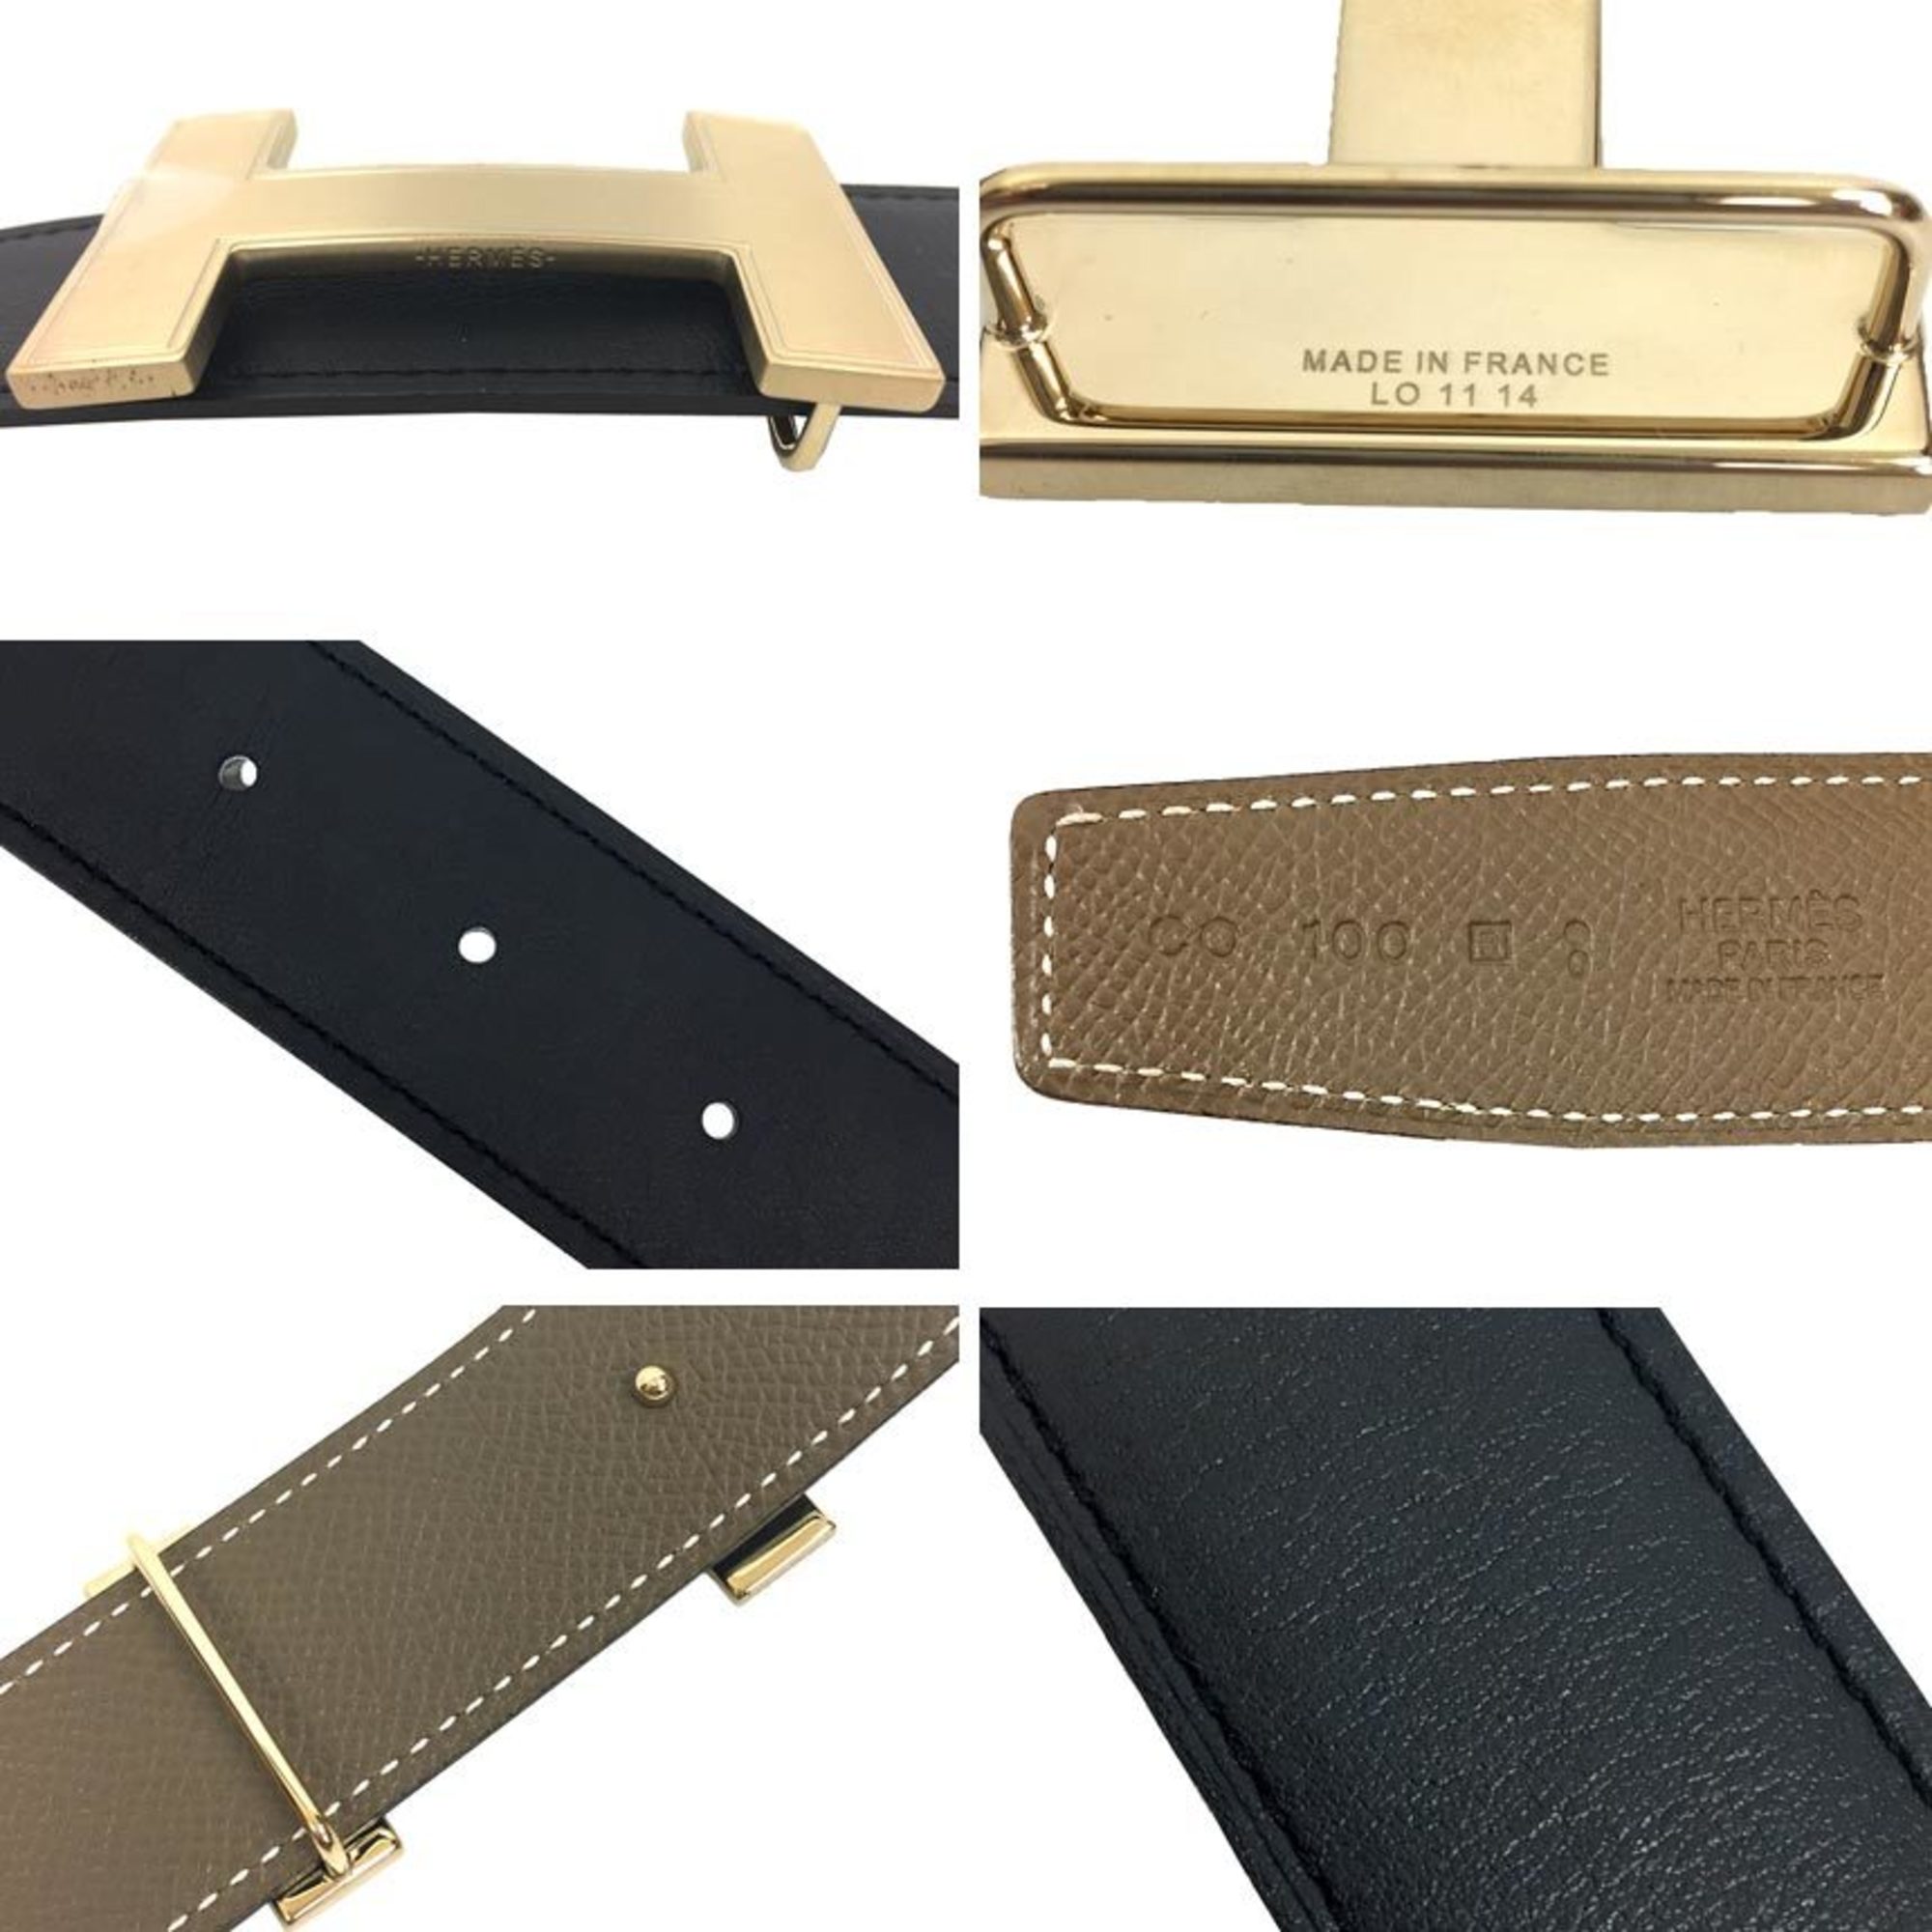 HERMES Belt Buckle Constance & Reversible 38 mm H Size 100 Black x Etaupe Gold Hermes